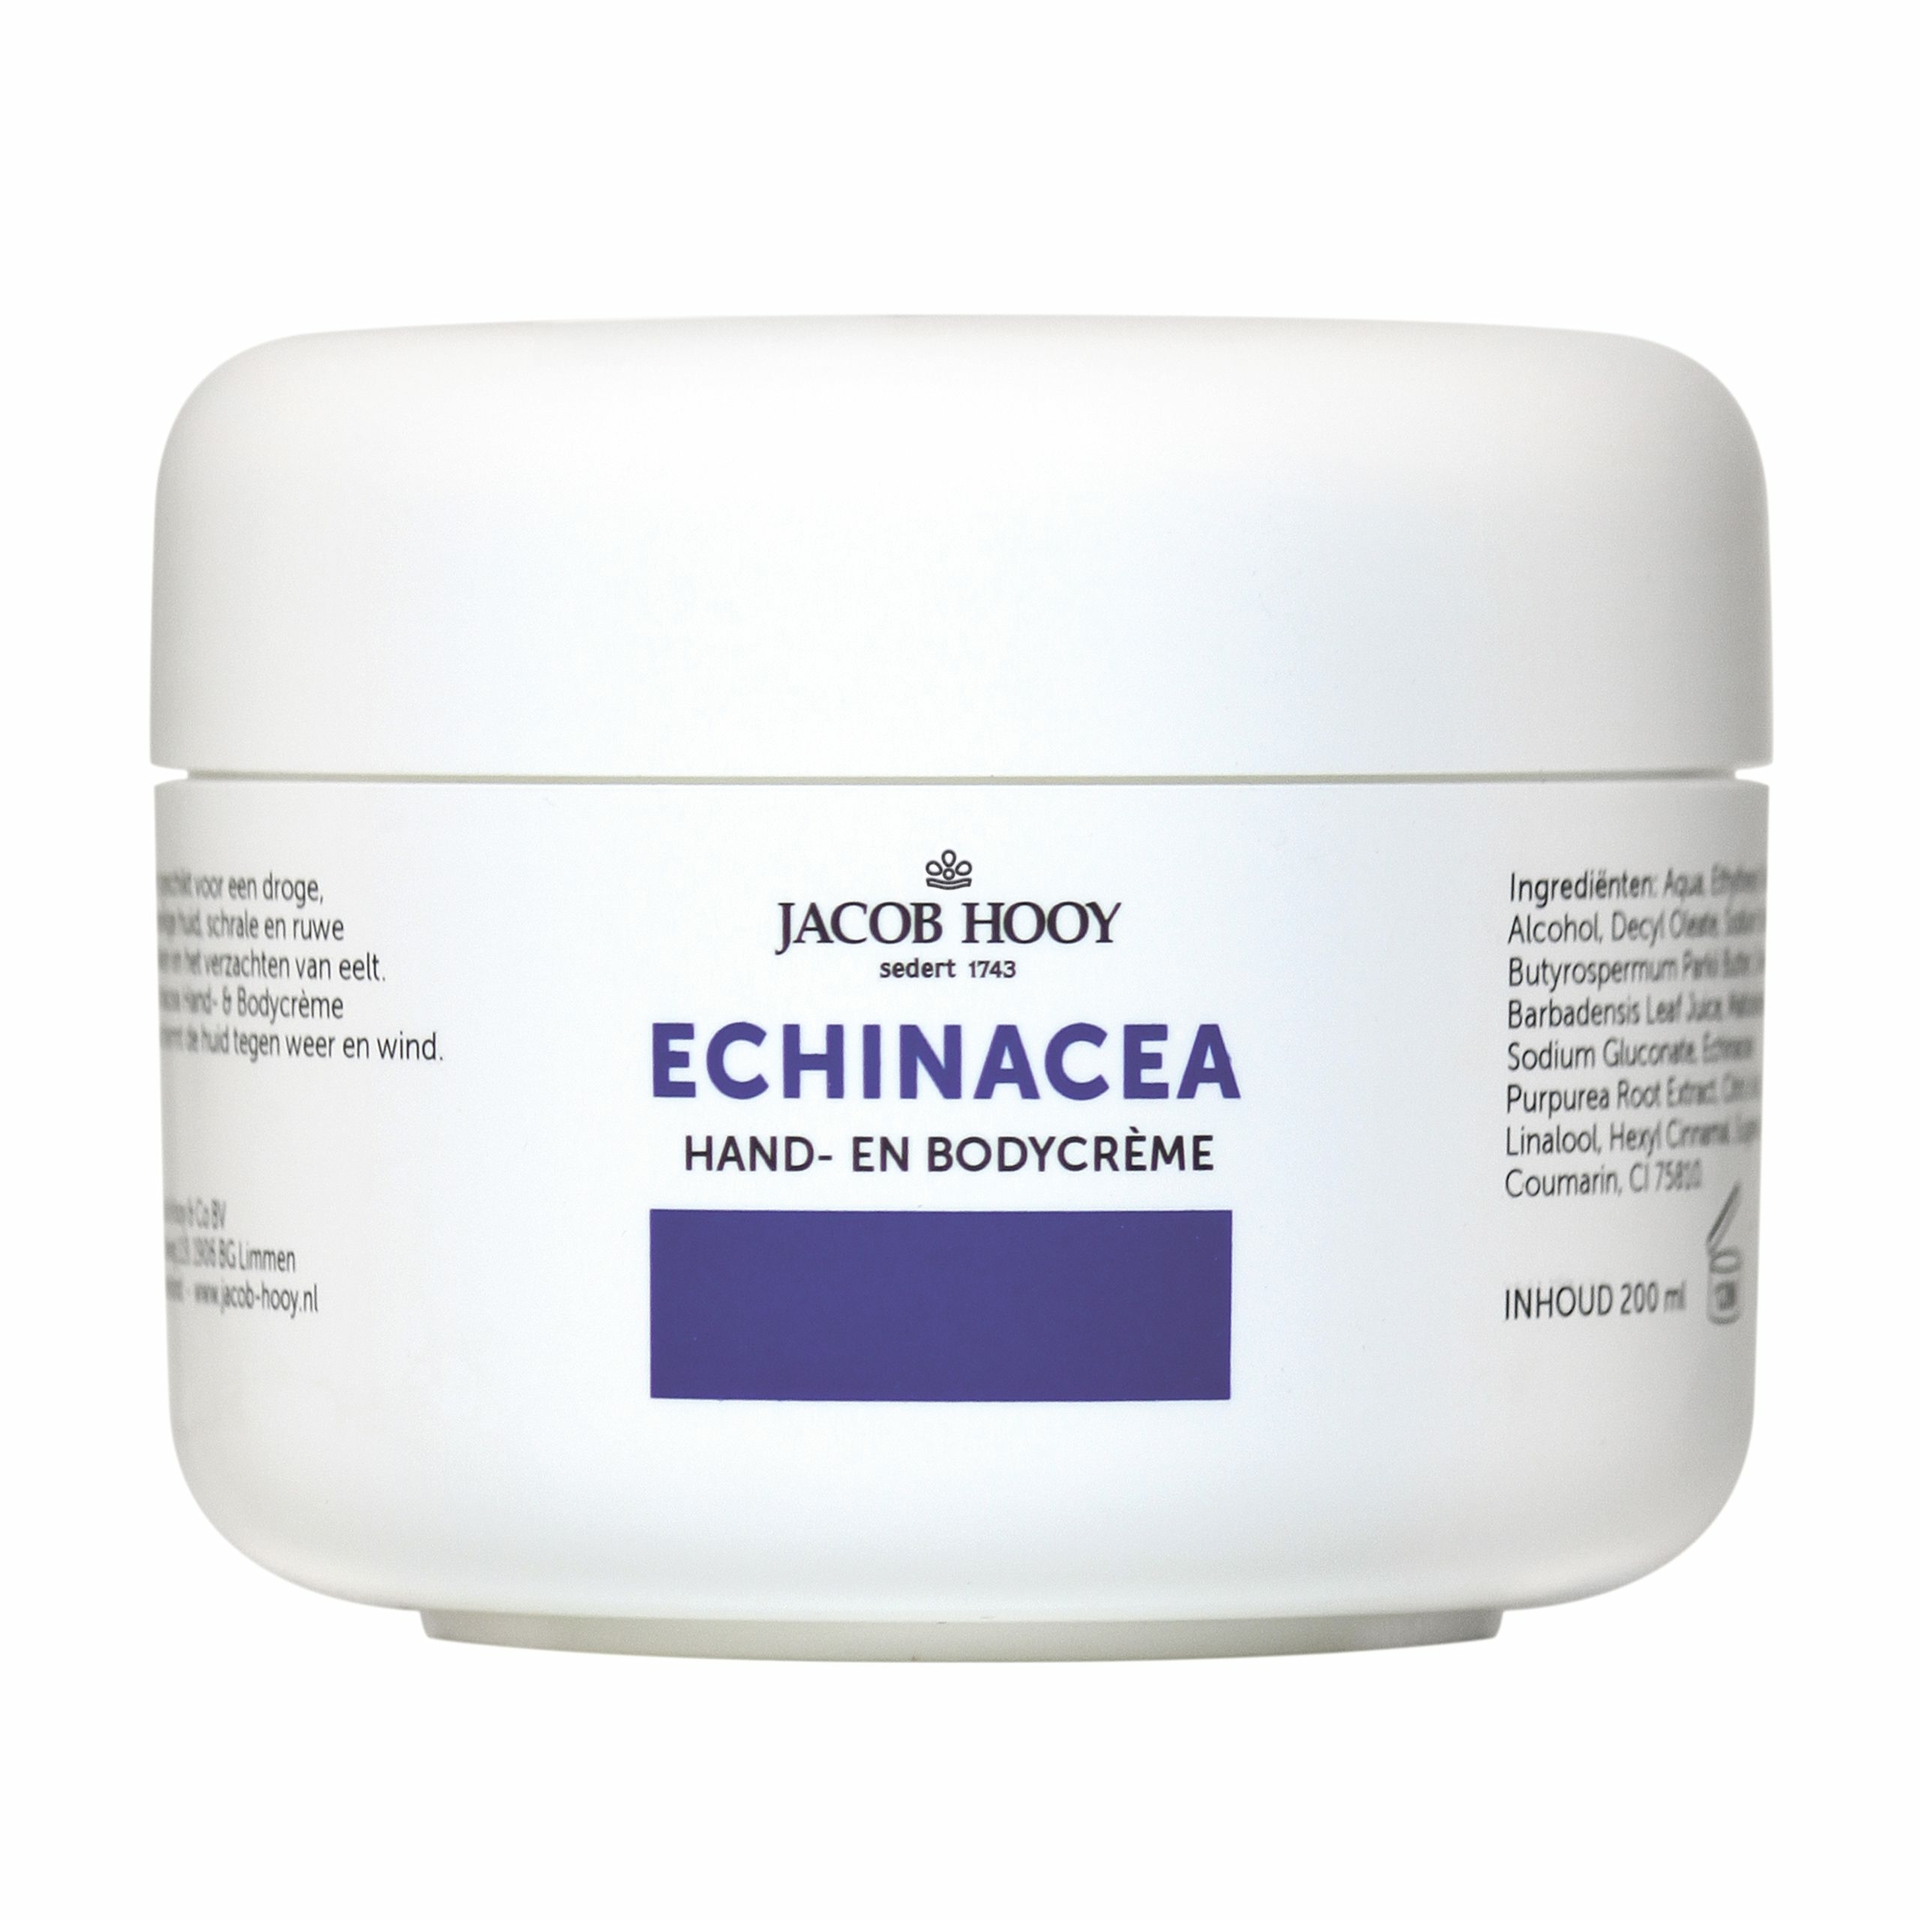 Echinacea hand- & bodycrème - 200ml - Jacob Hooy